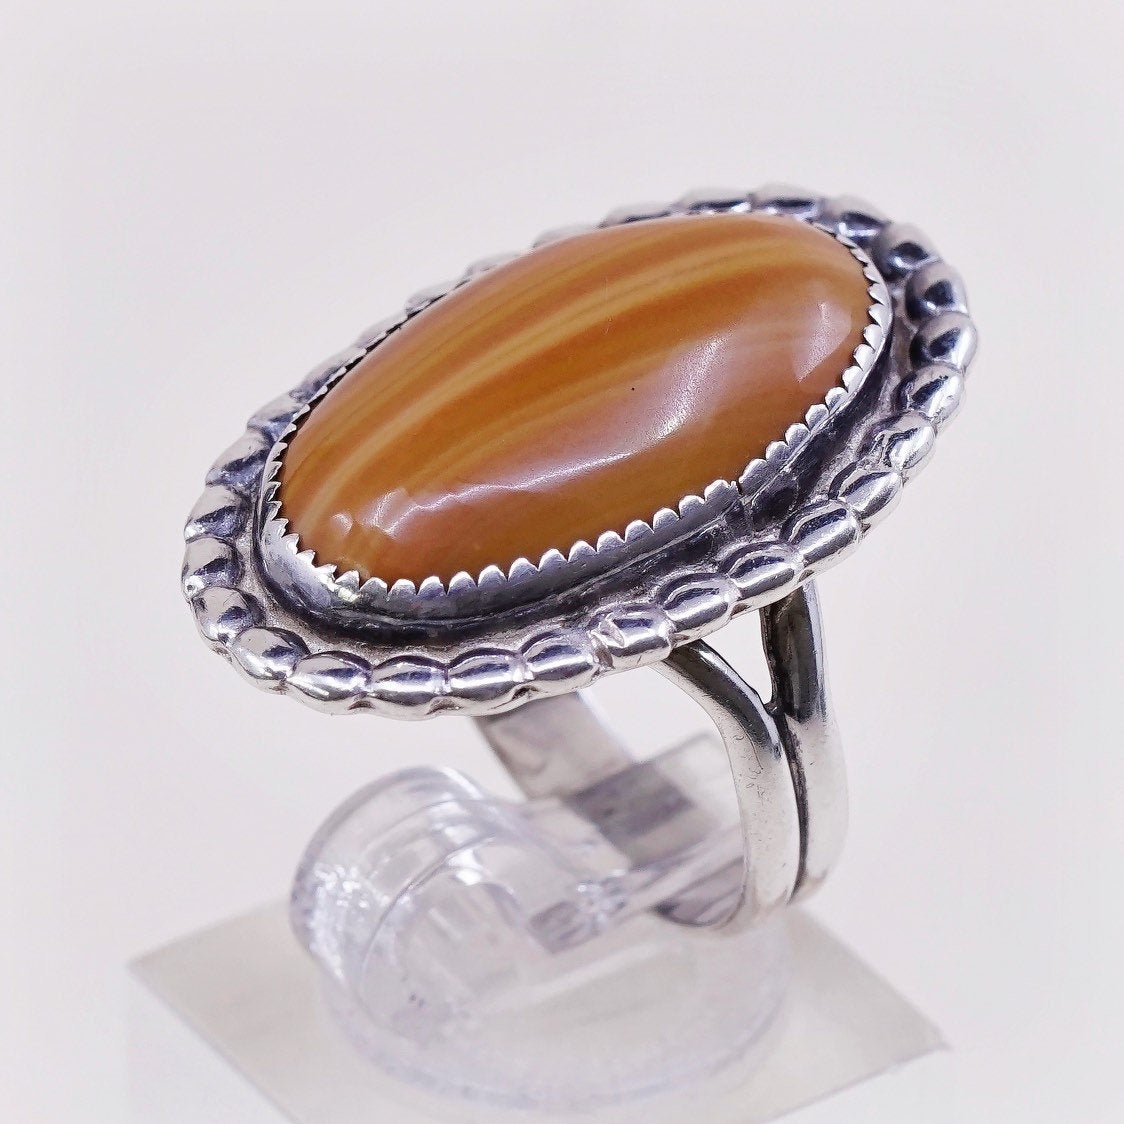 sz 7.25, vtg Southwestern sterling 925 handmade ring w/ orange agate and beads